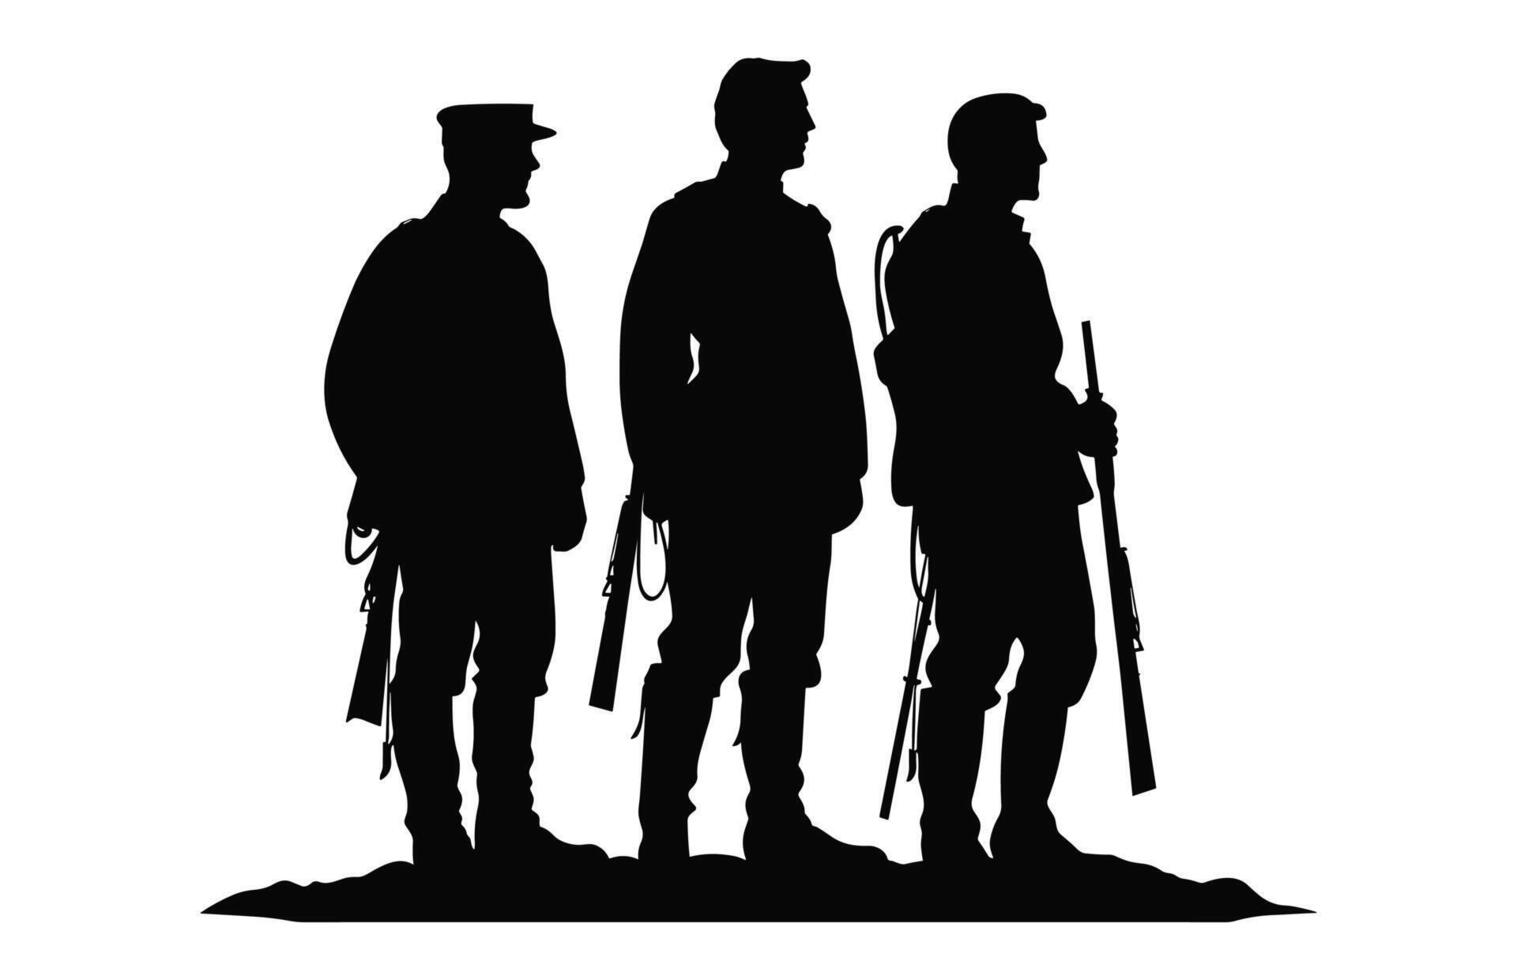 American Civil War soldiers Silhouette vector, Civil War soldier black silhouettes vector